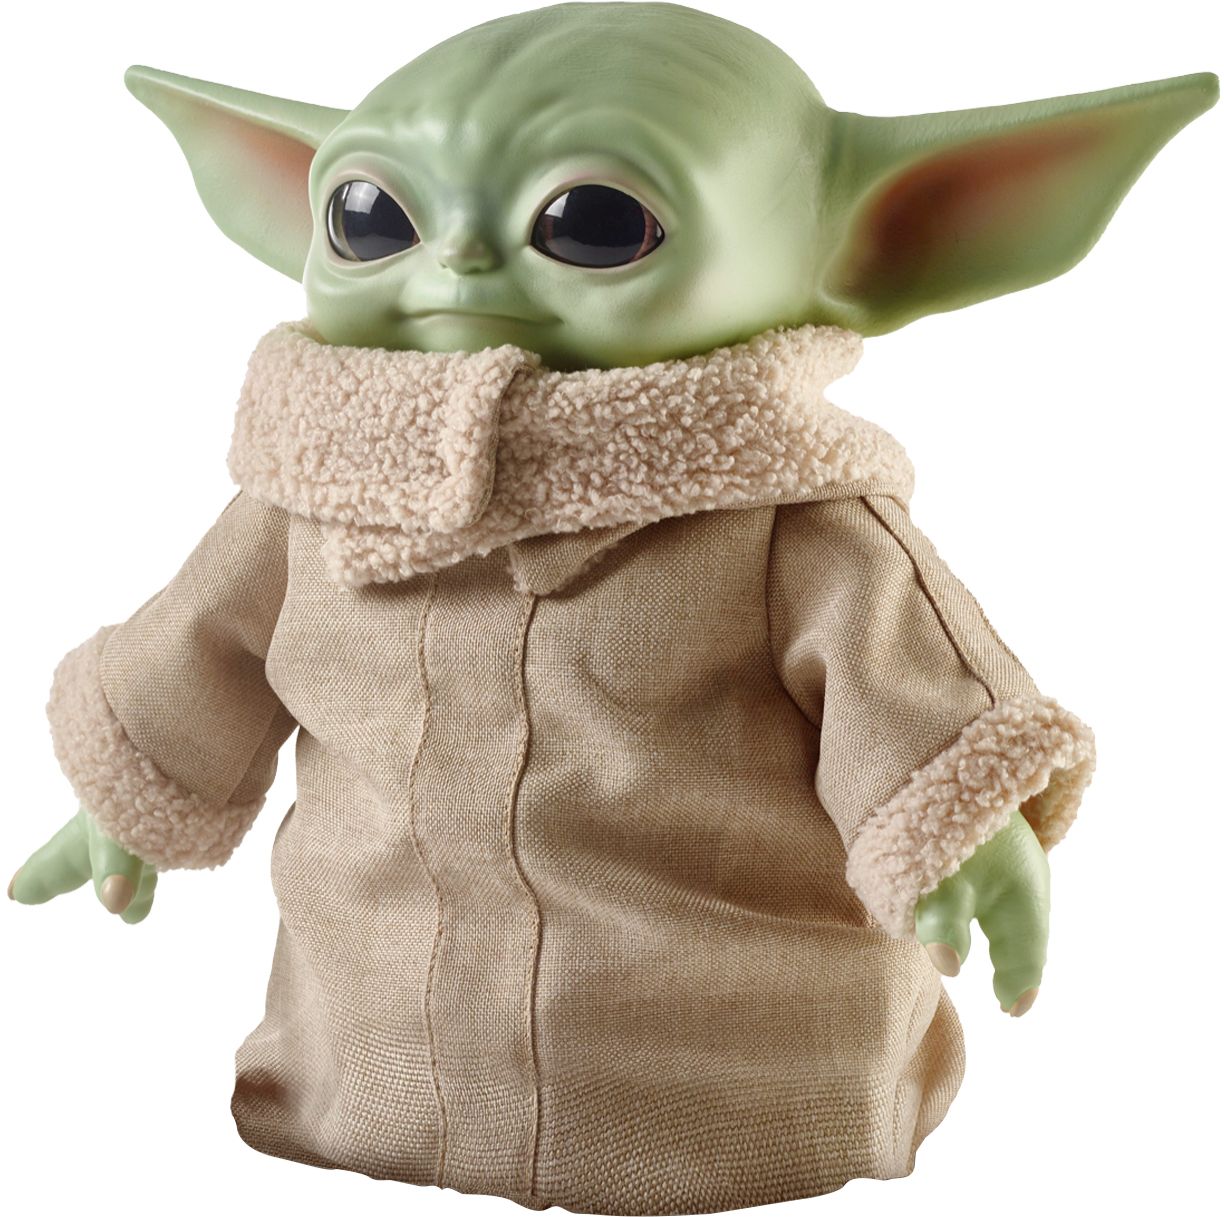 Stars Wars The Mandalorian Baby Yoda Plush Doll The Child 11 Inch Toy by Mattel 